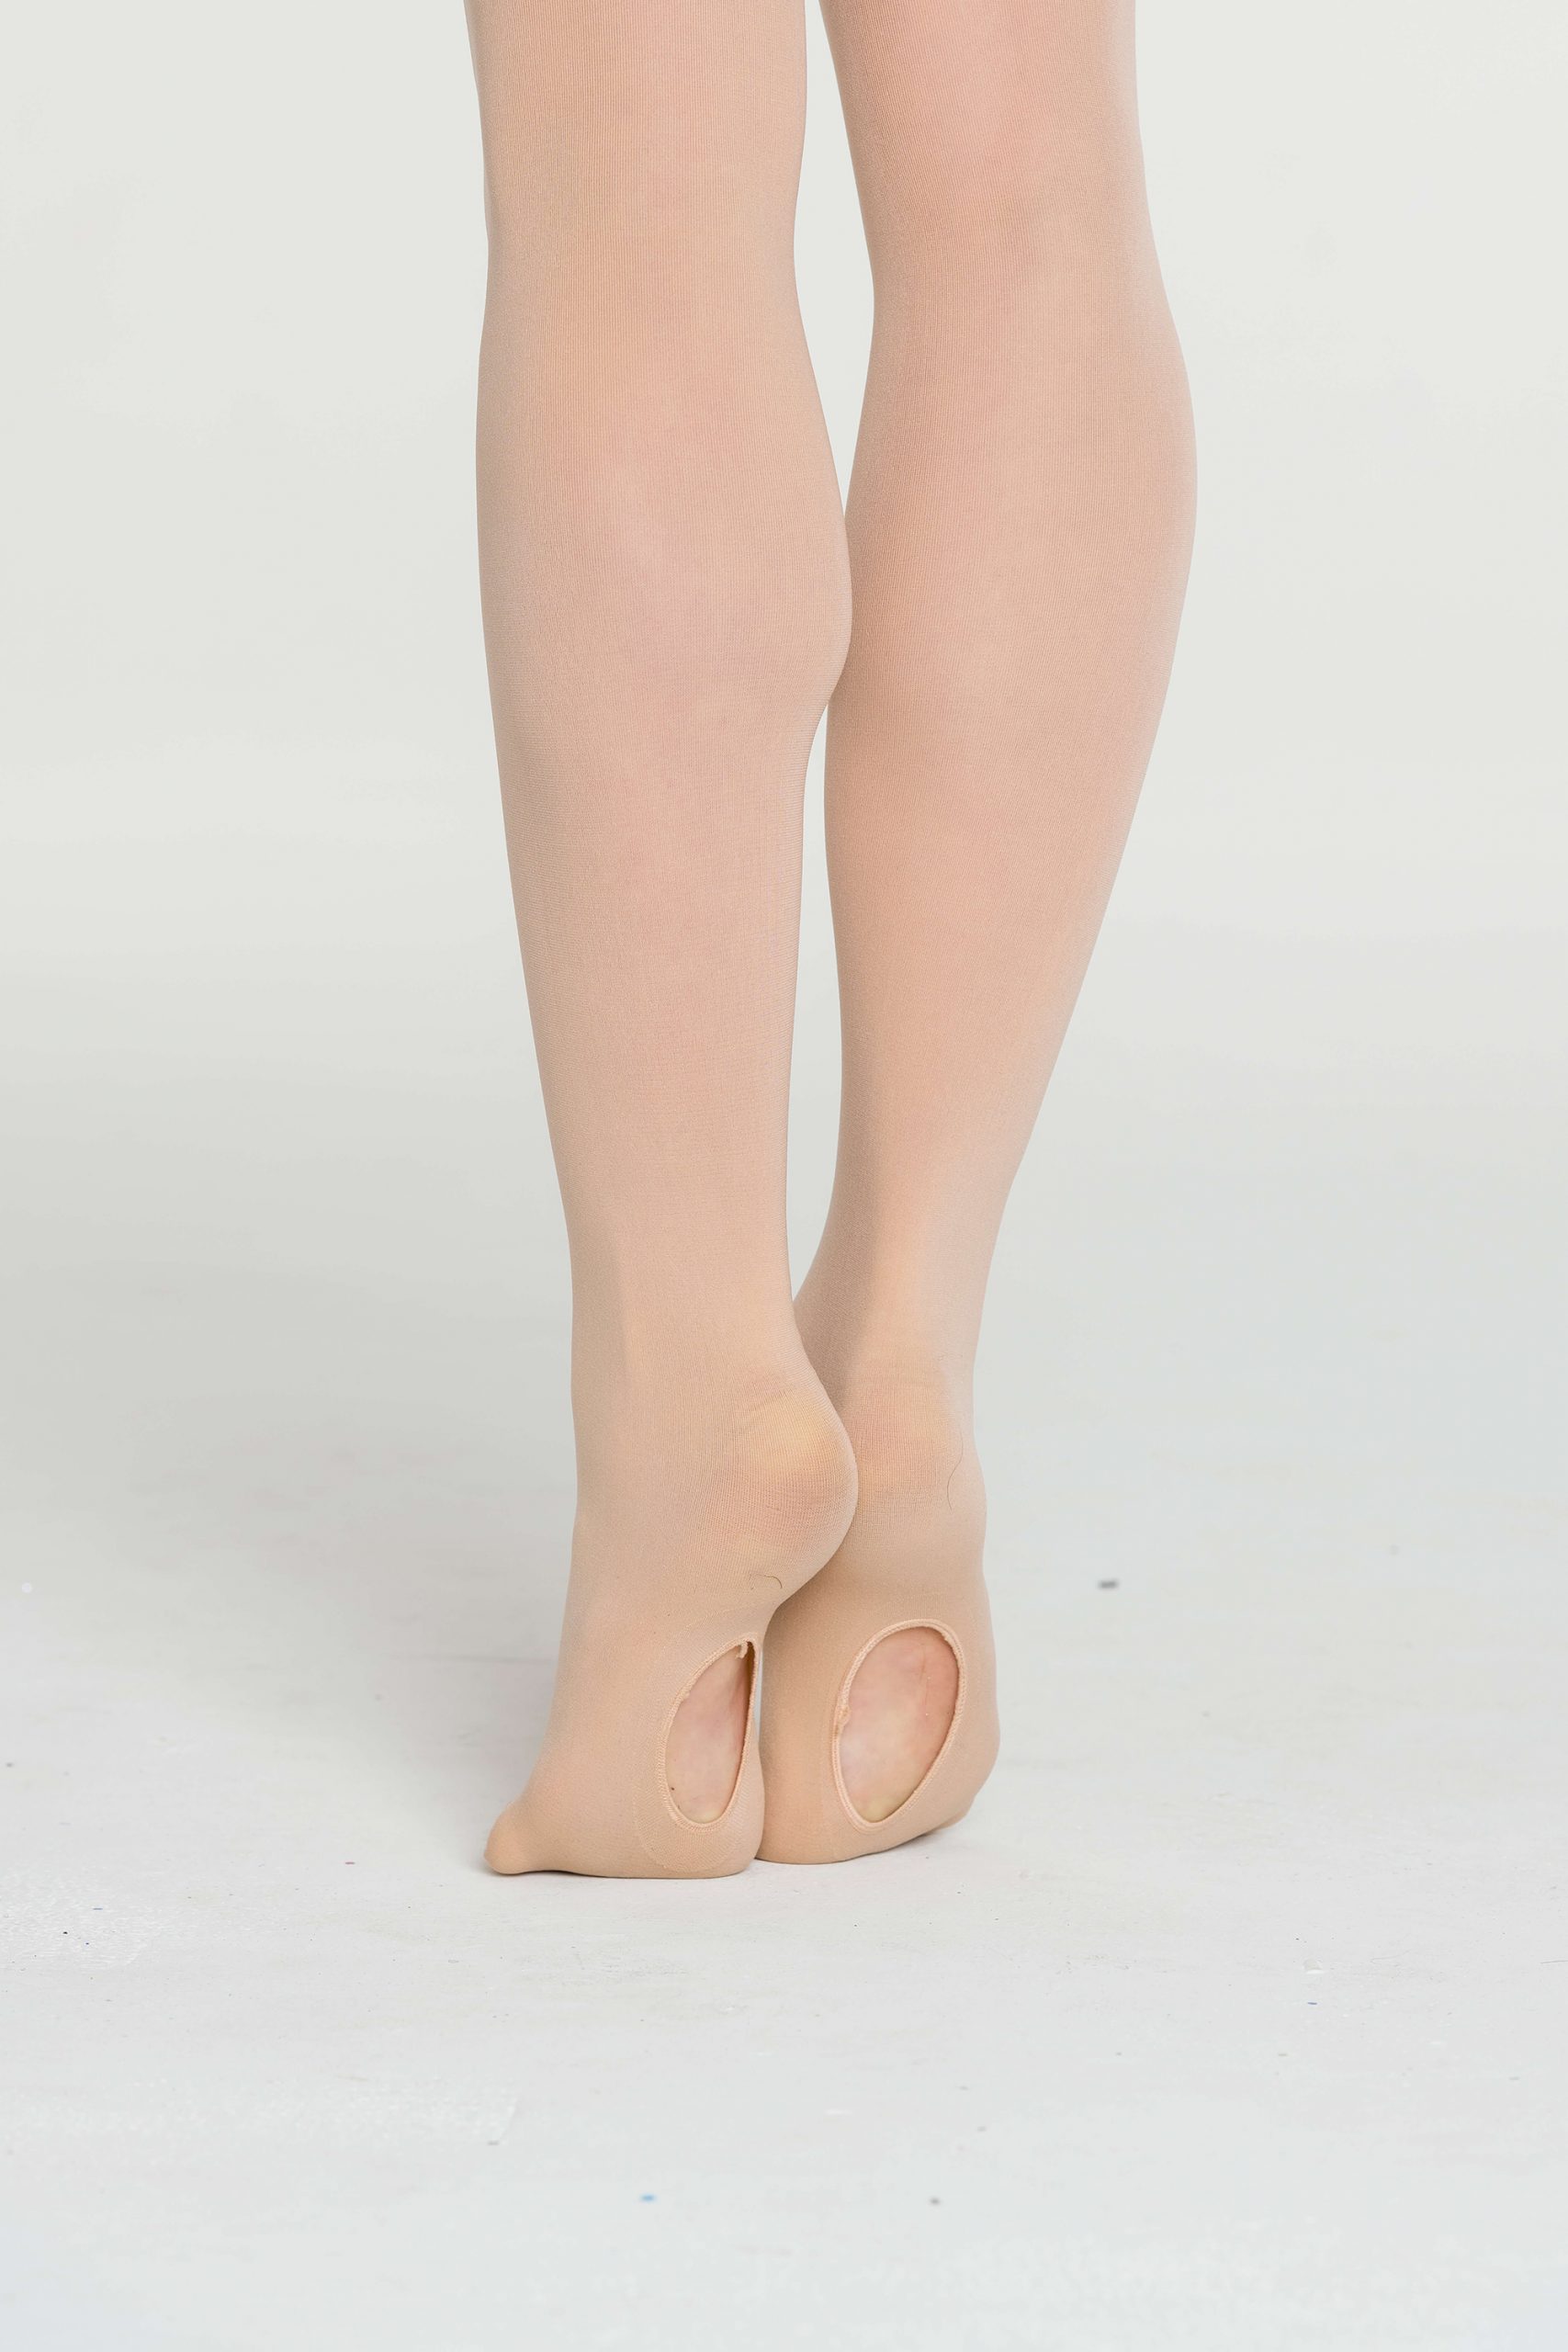 Girls kids convertible Foot & full foot Ballet Dance tights Pink Age 7-13 